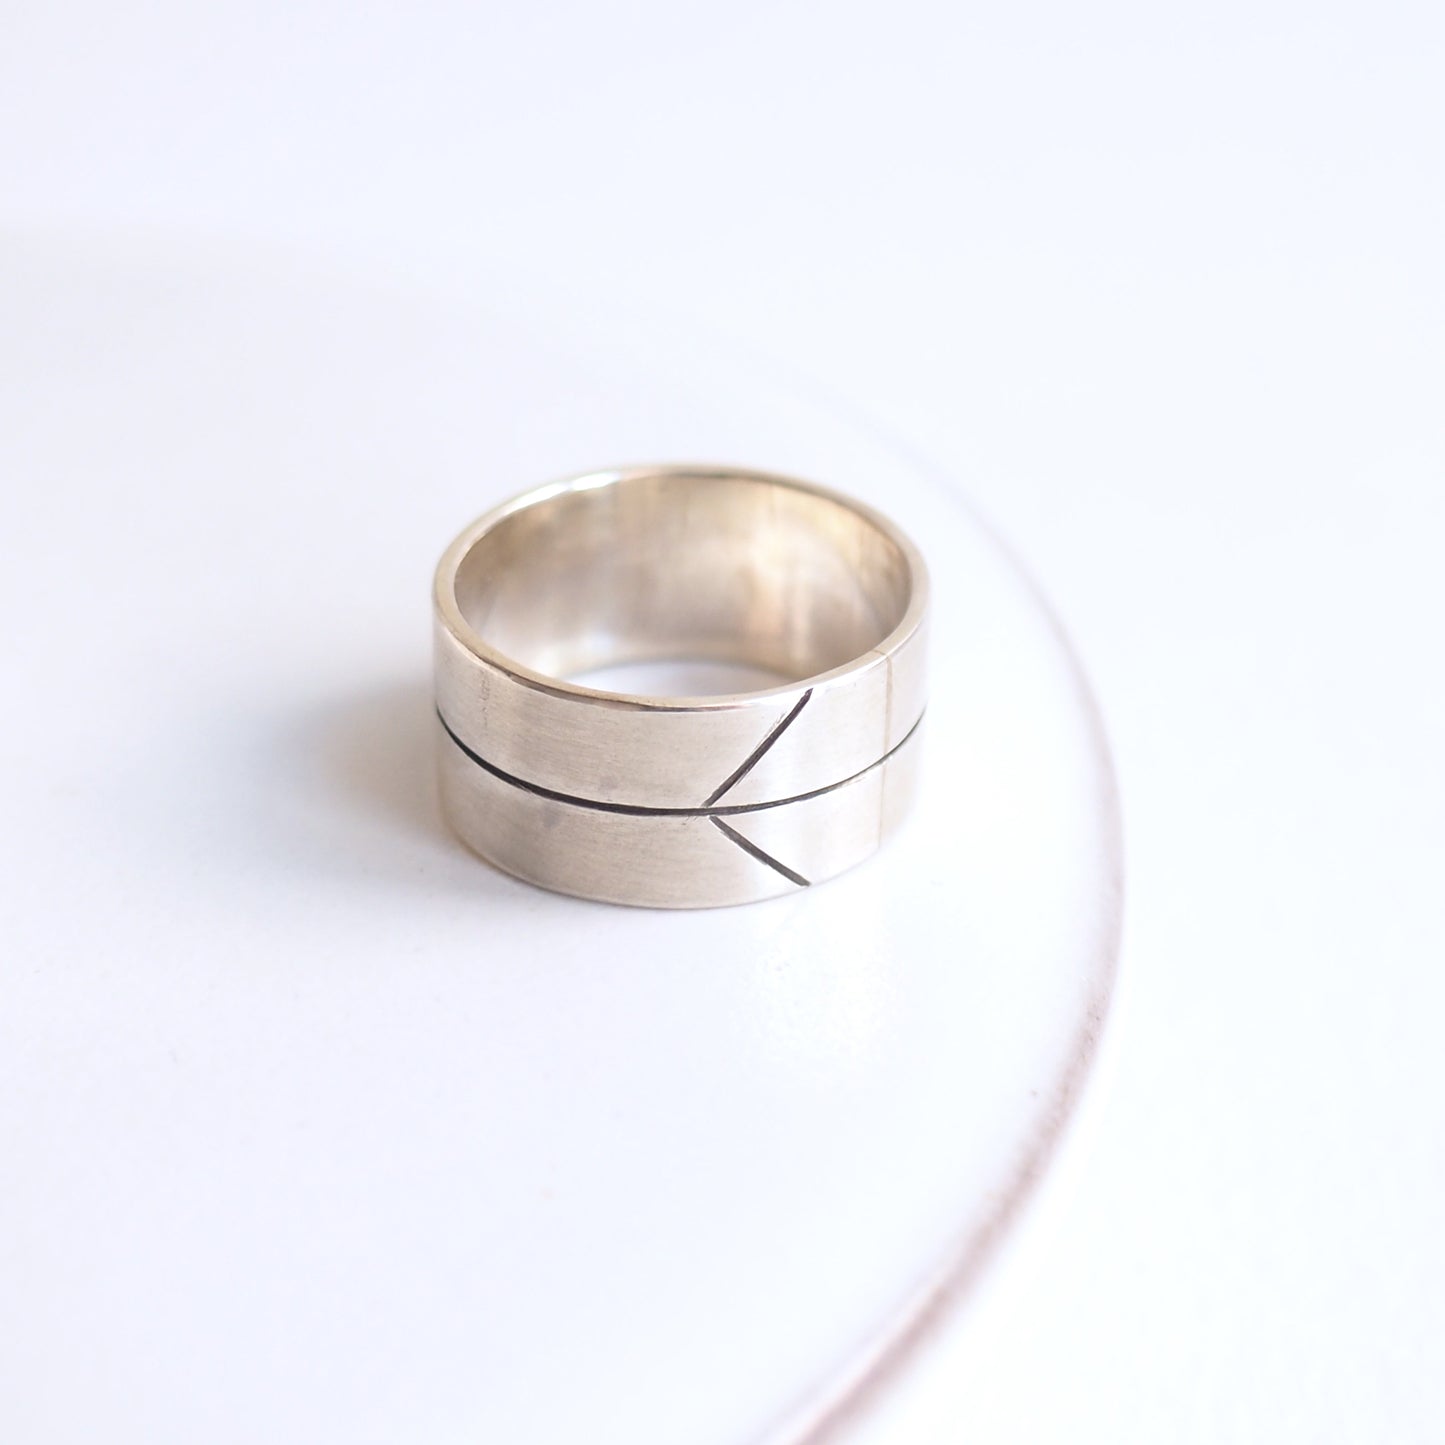 Man  jewelry ring silver gold handmade handcrafted fashion custom bespoke 